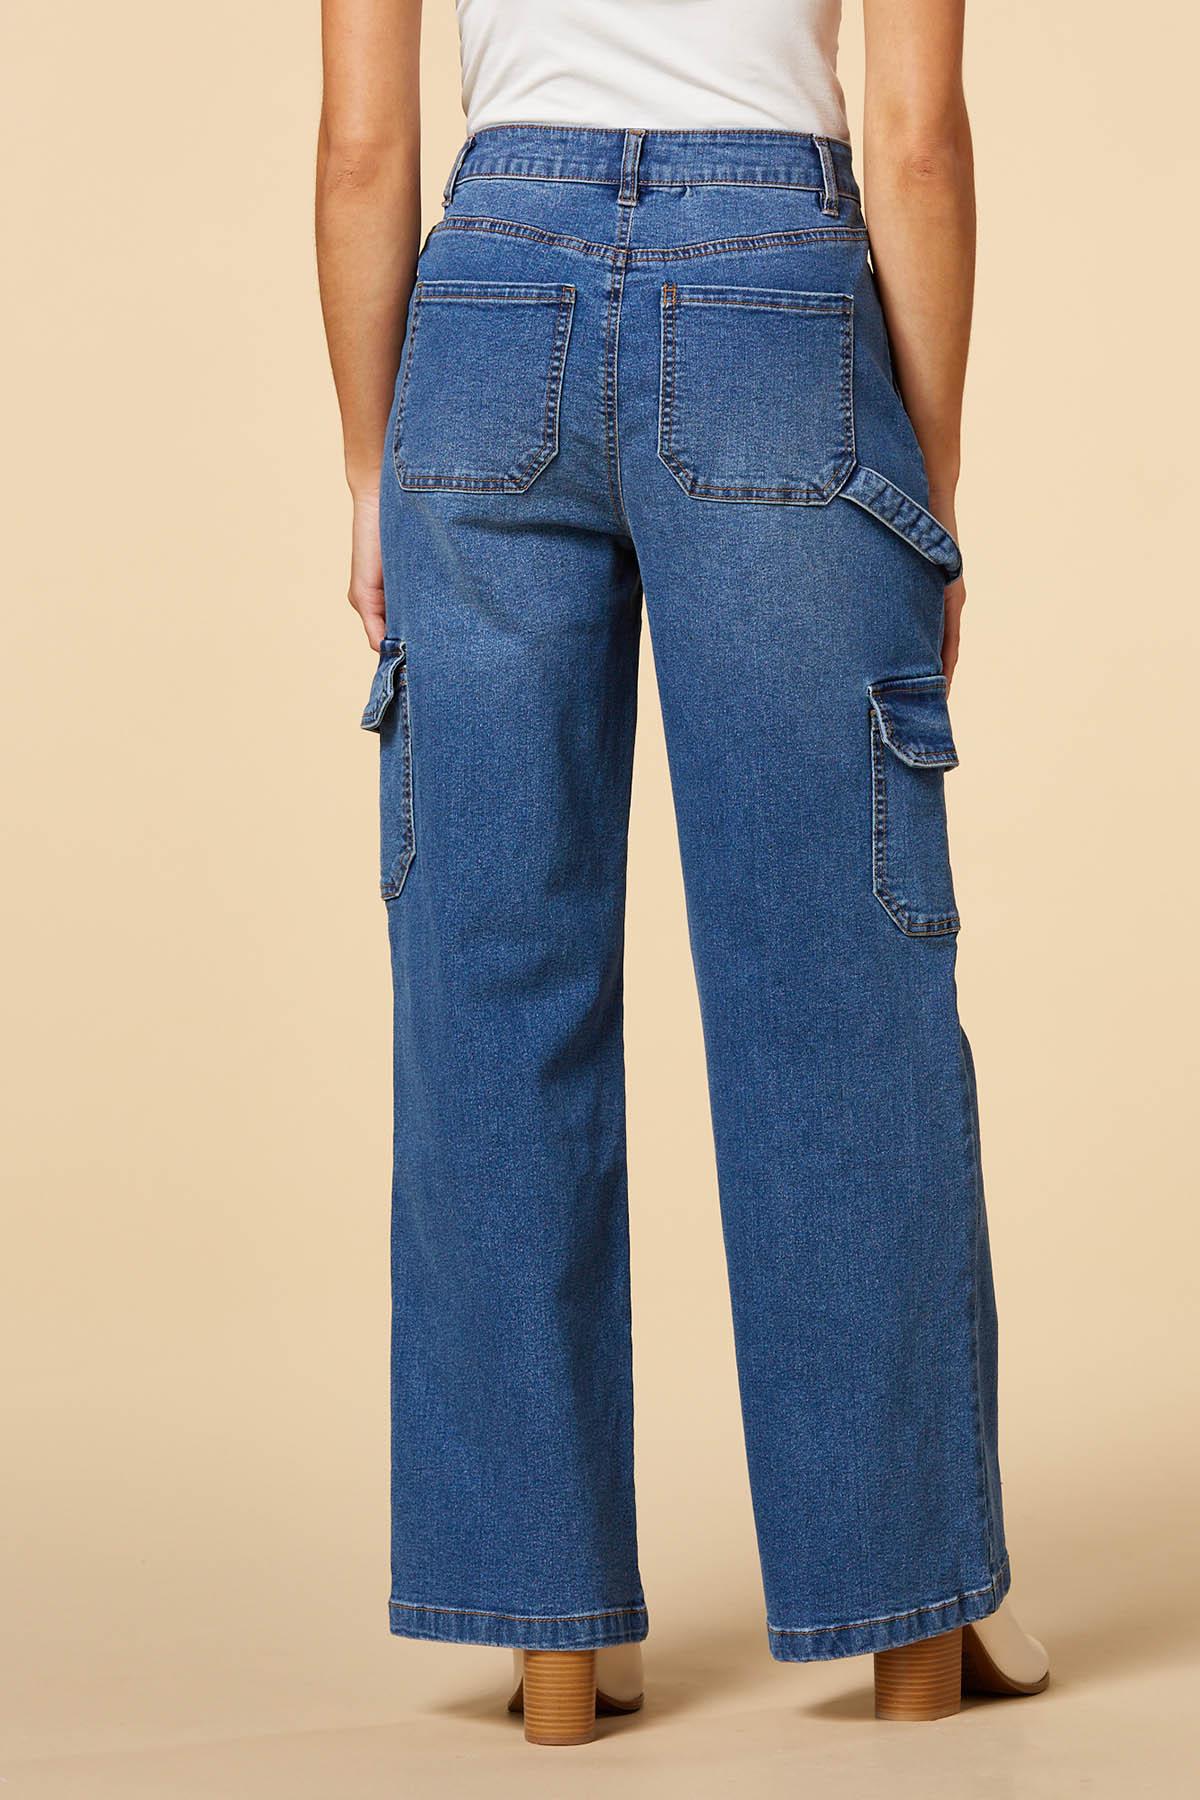 Versona | pocketful of sunshine jeans